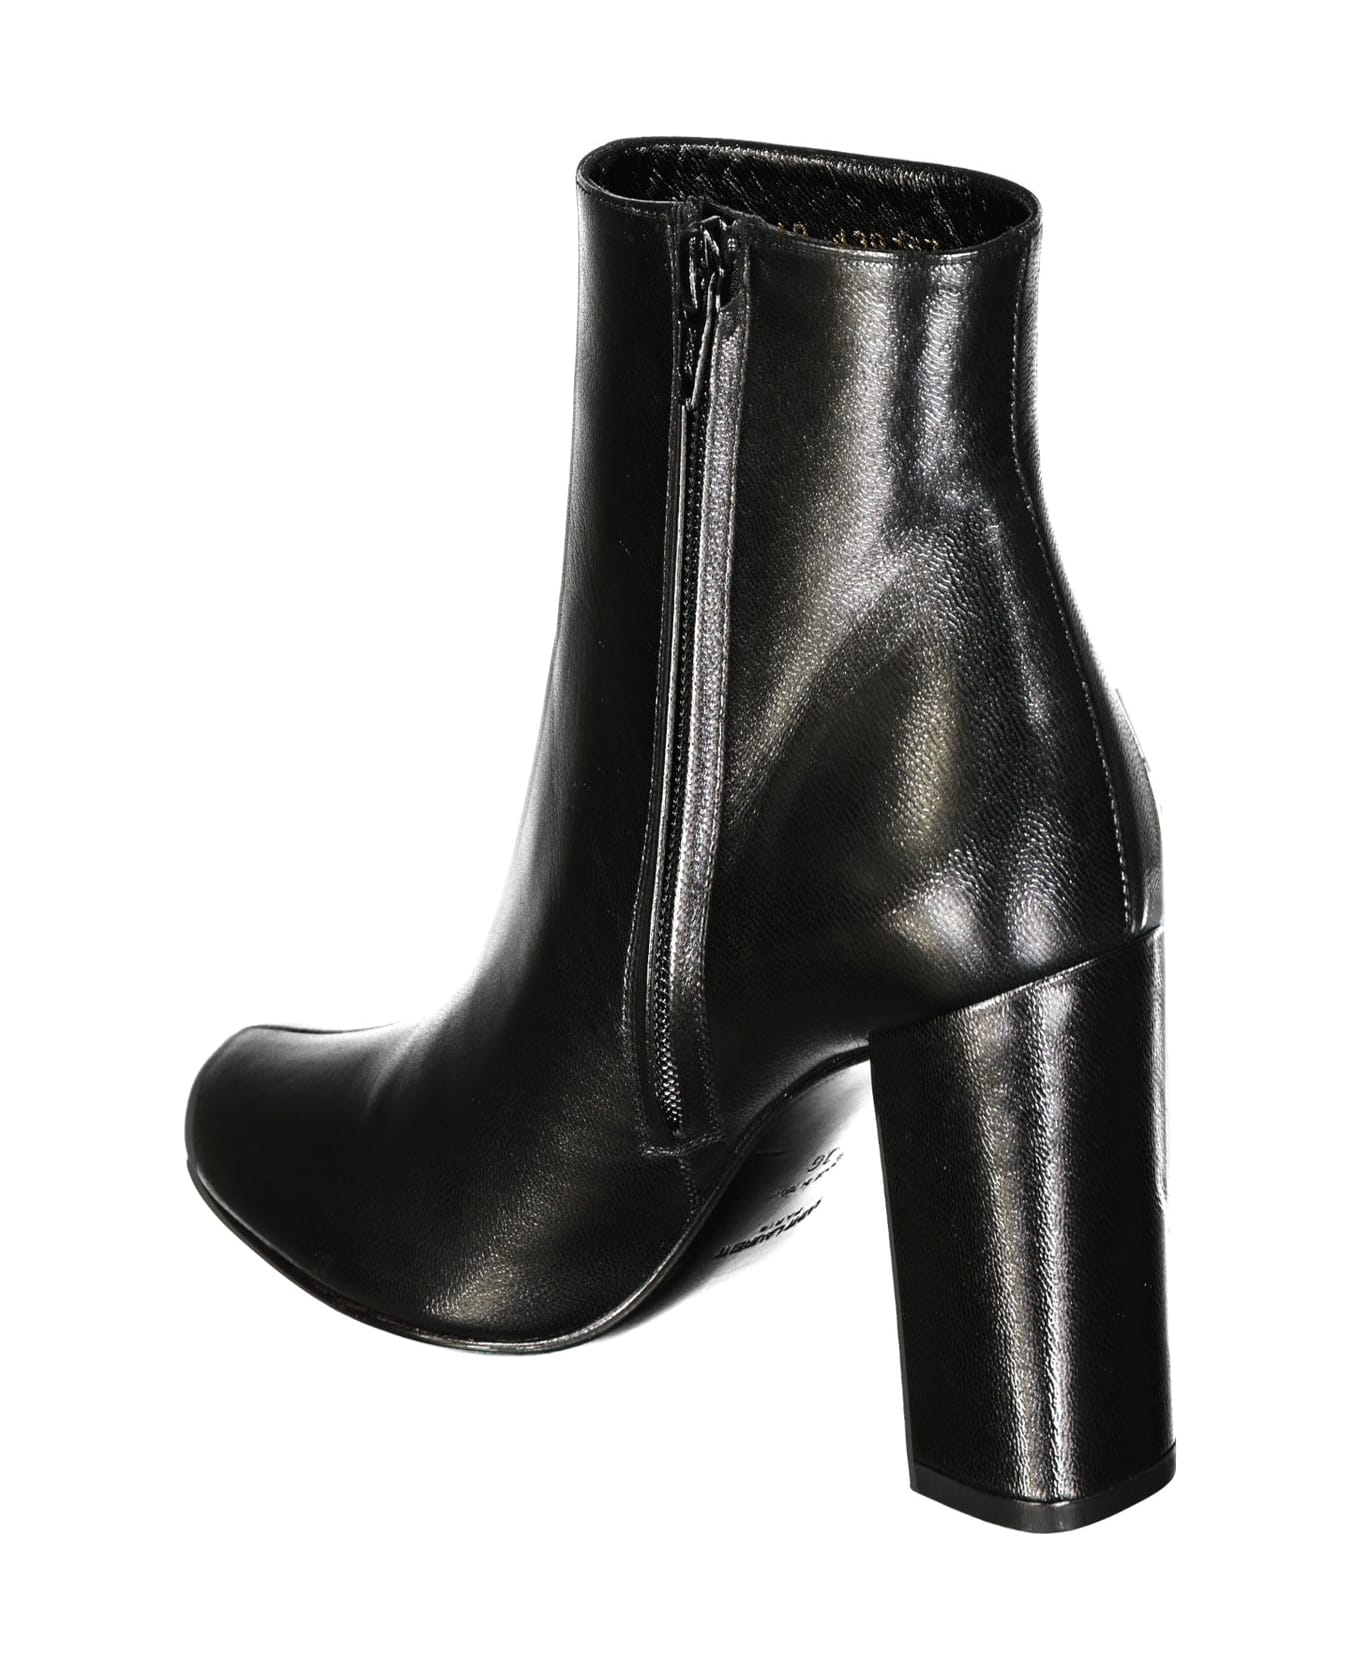 Saint Laurent Leather Ankle Boots - Black ブーツ